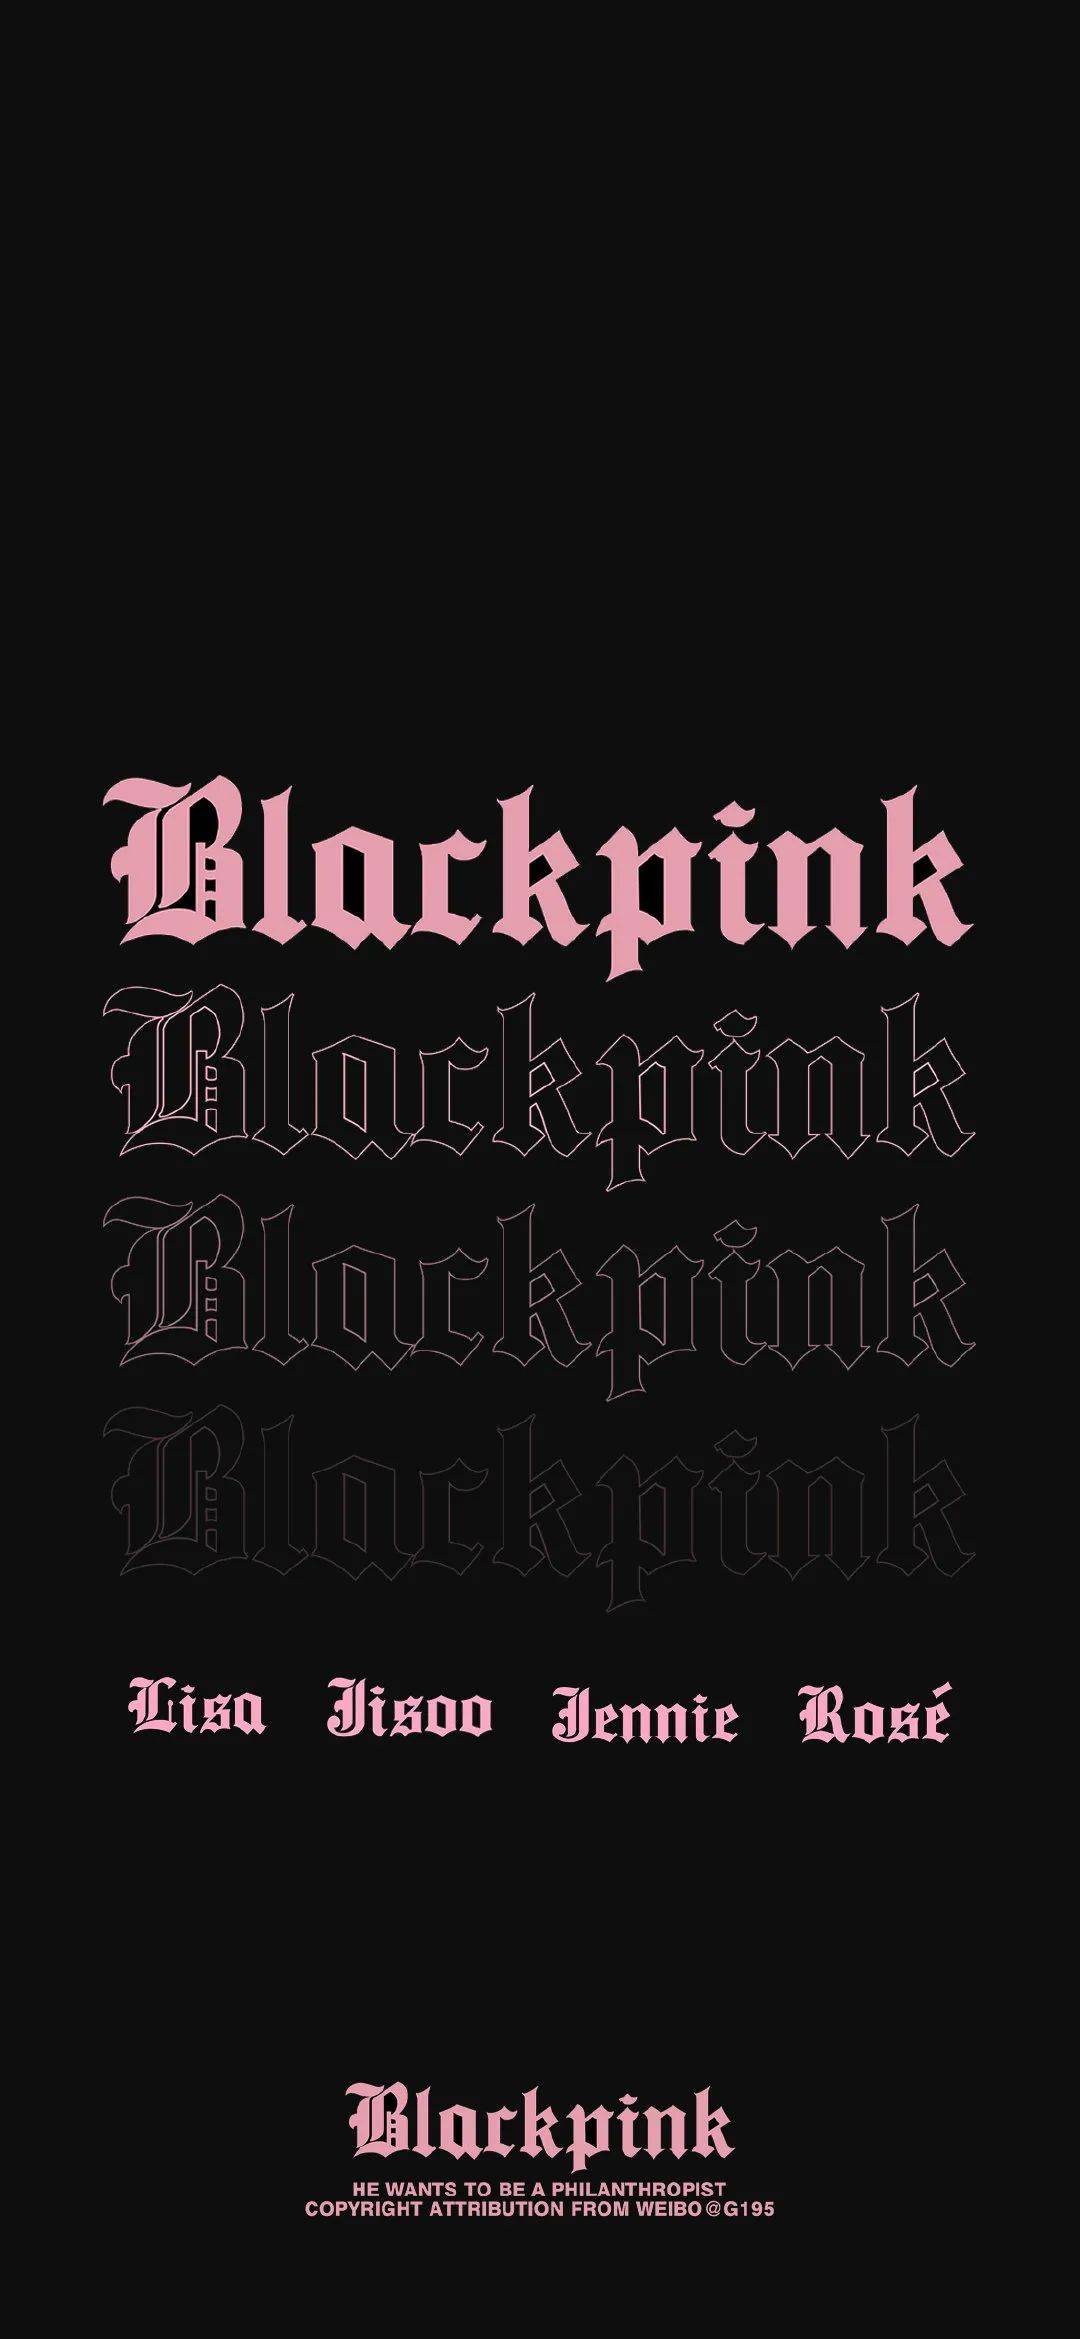 blackpink黑底粉字图图片